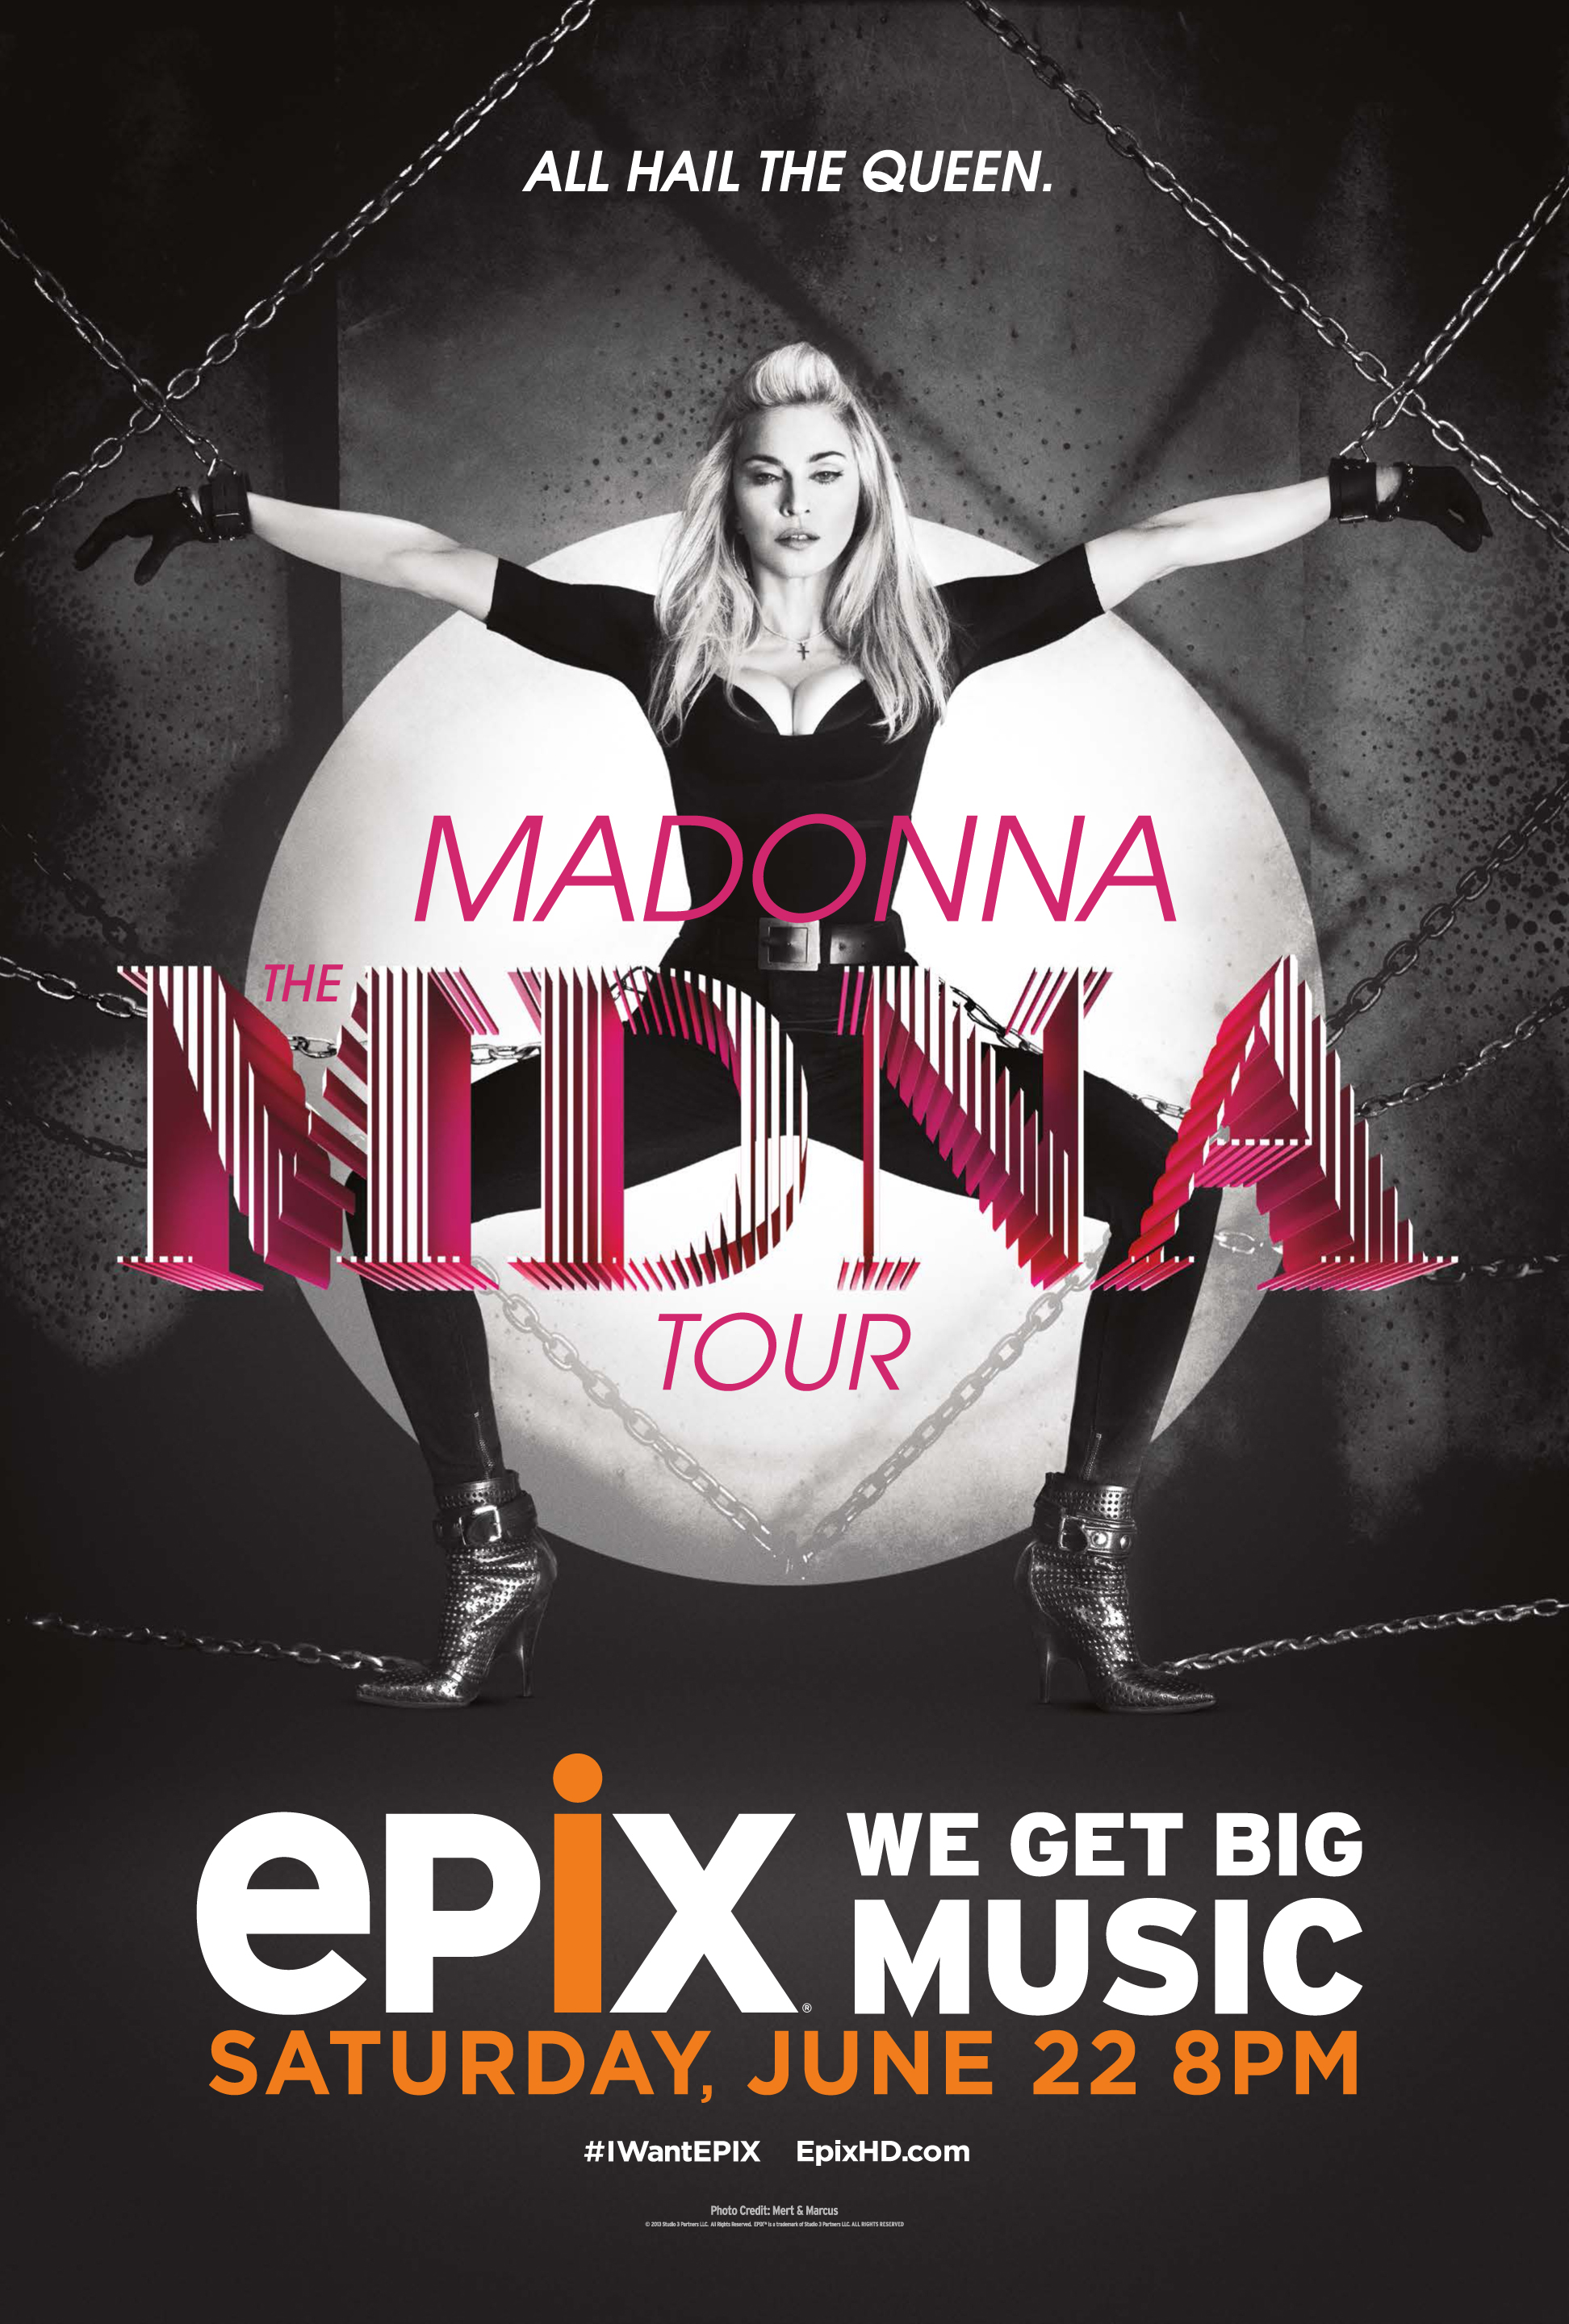 madonna mdna tour dates